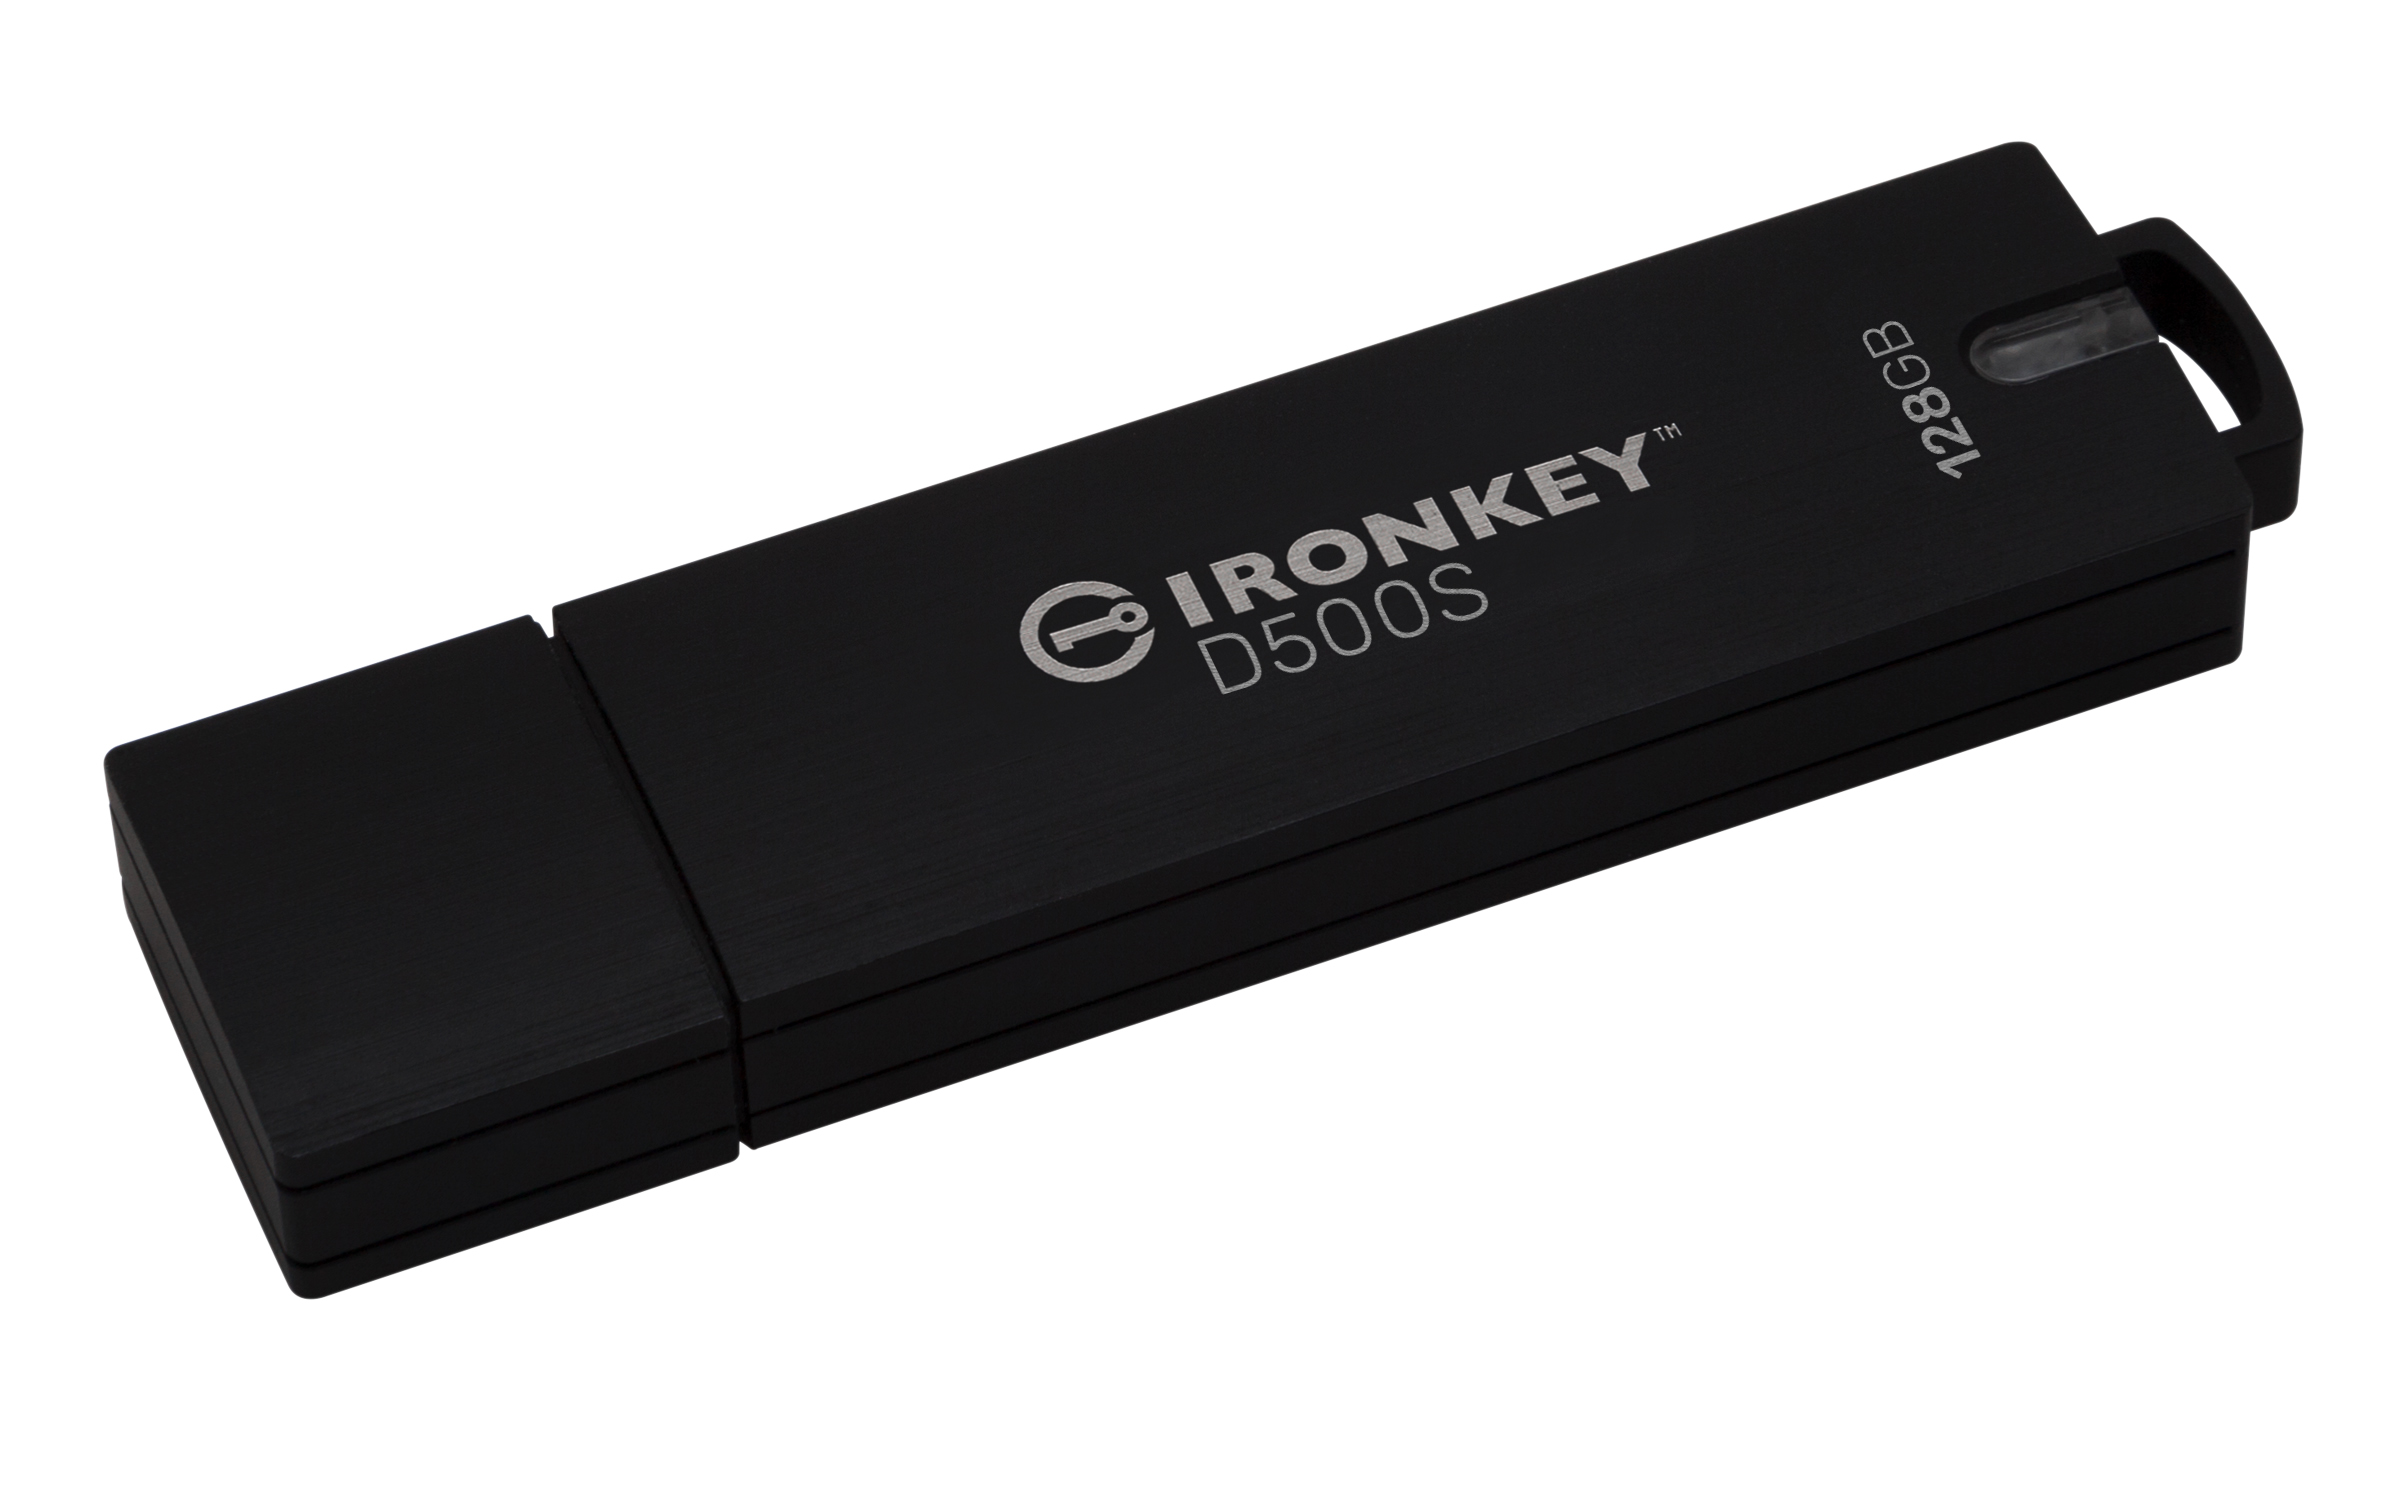 128GB USB Kingston Ironkey D500S FIPS 140-3 Lvl 3